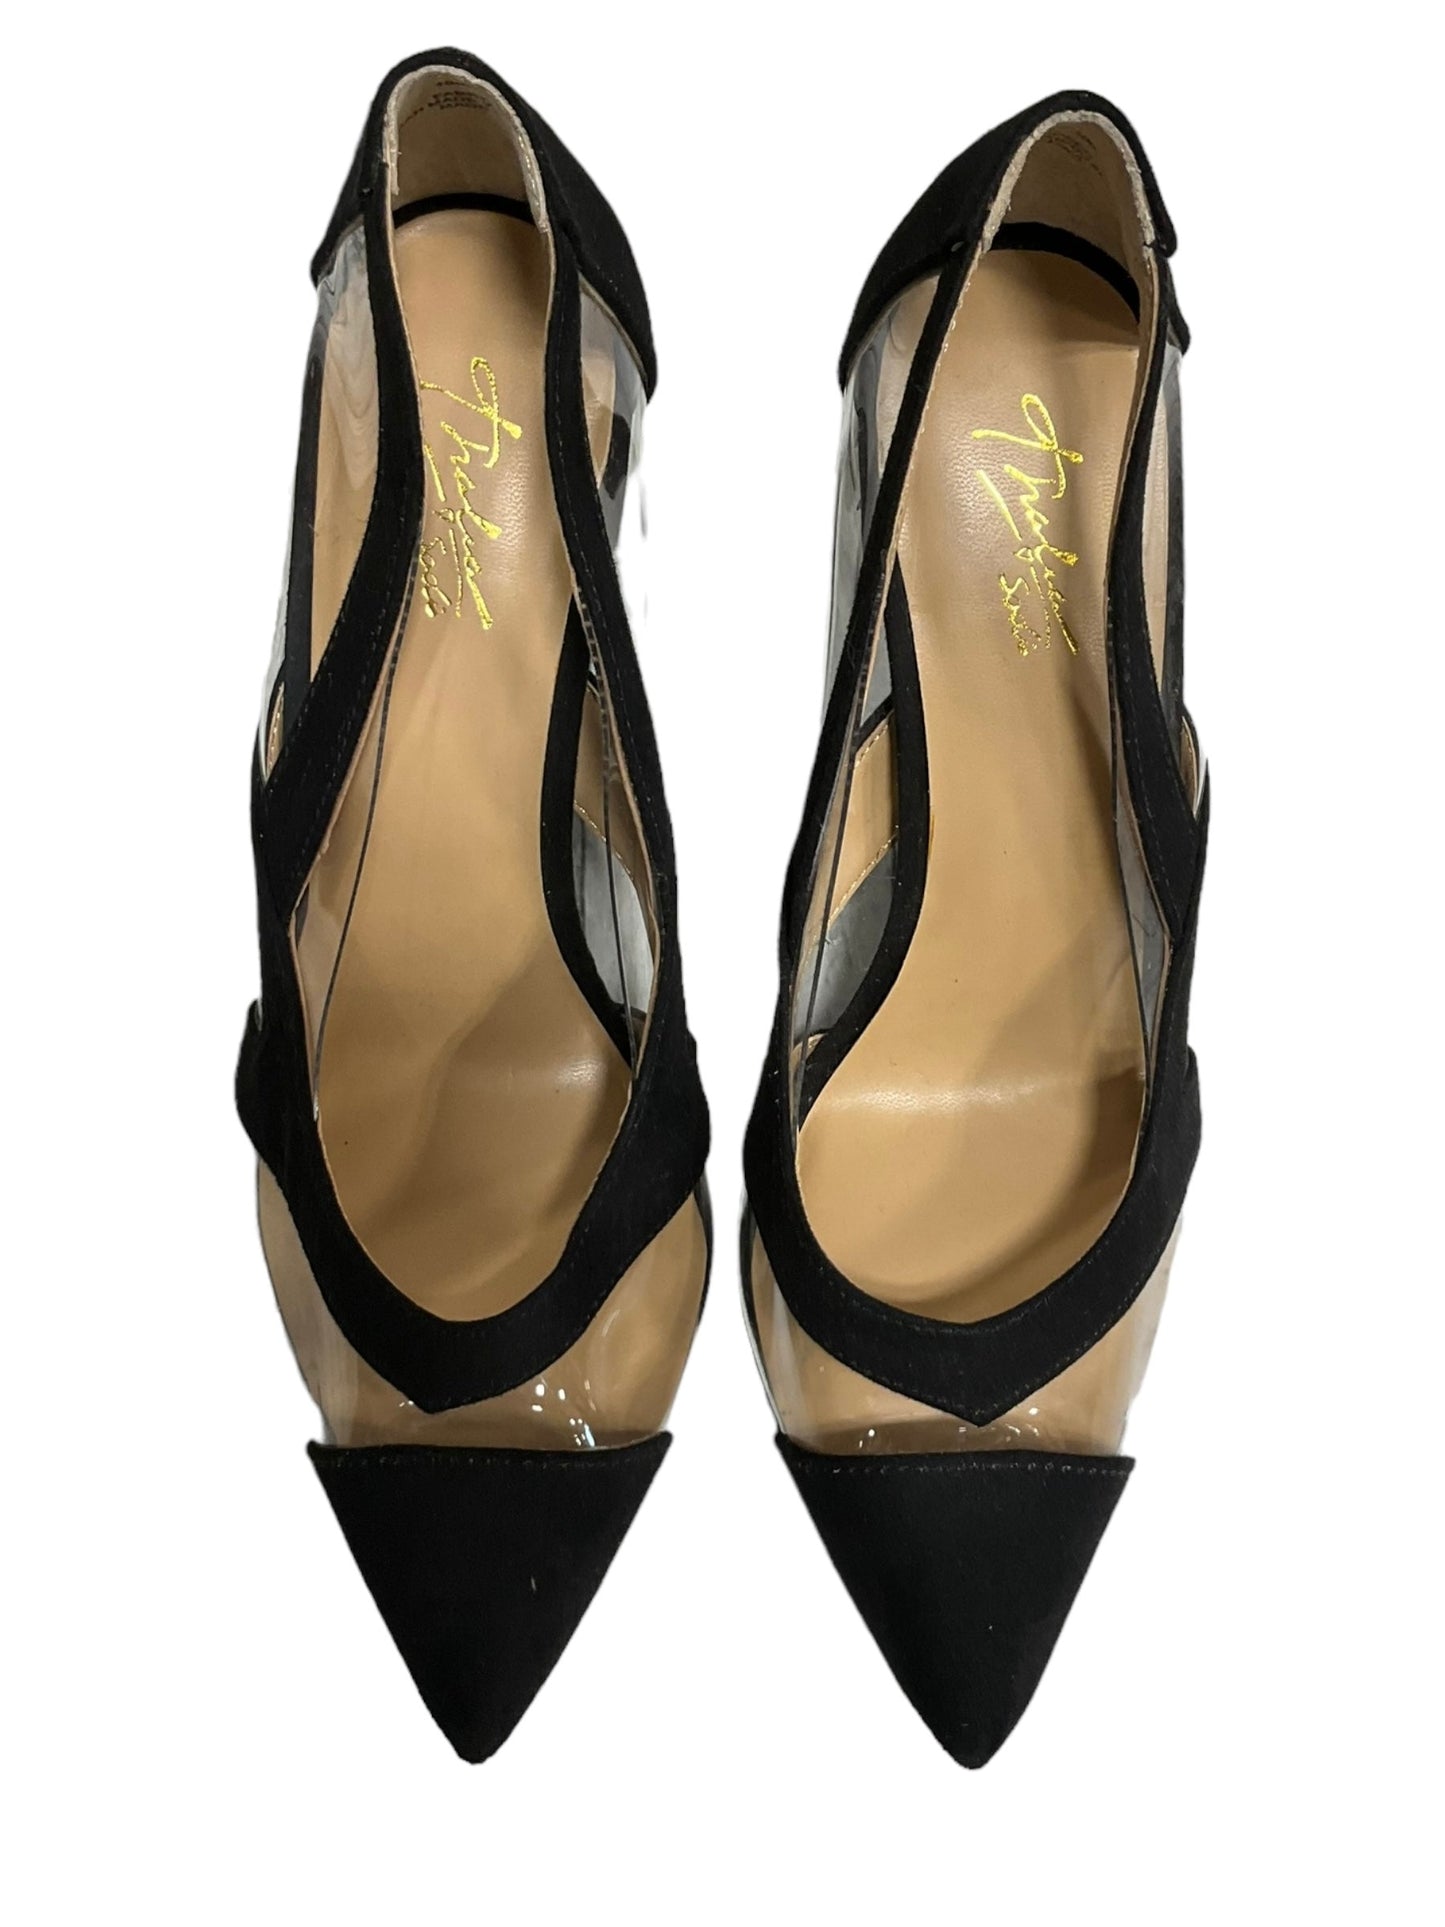 Black Shoes Heels Stiletto Thalia Sodi, Size 8